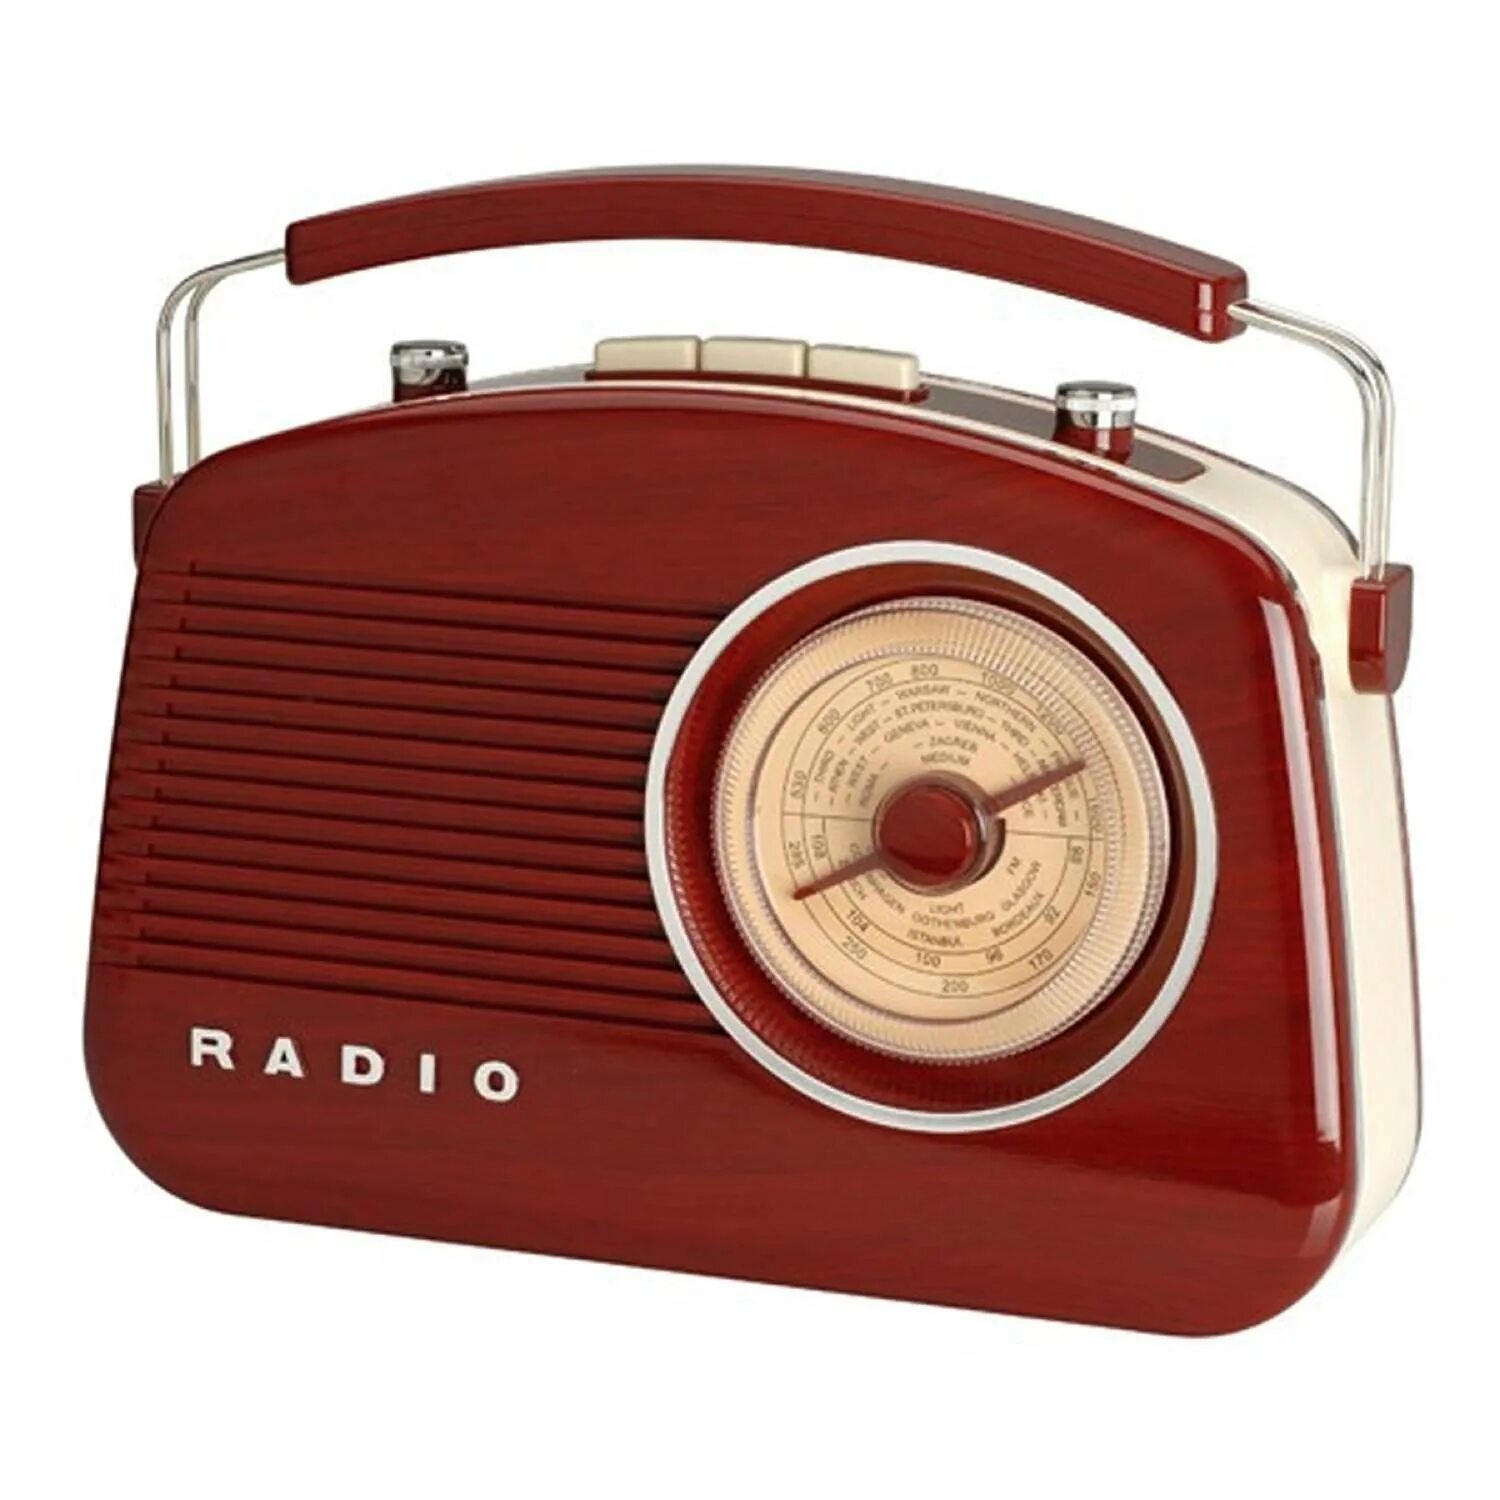 Что играло на радио ретро. Радио ретро hr503. Melarto / ретро радиоприемник. Ретро приемник. Радиоприемники 50-х годов.